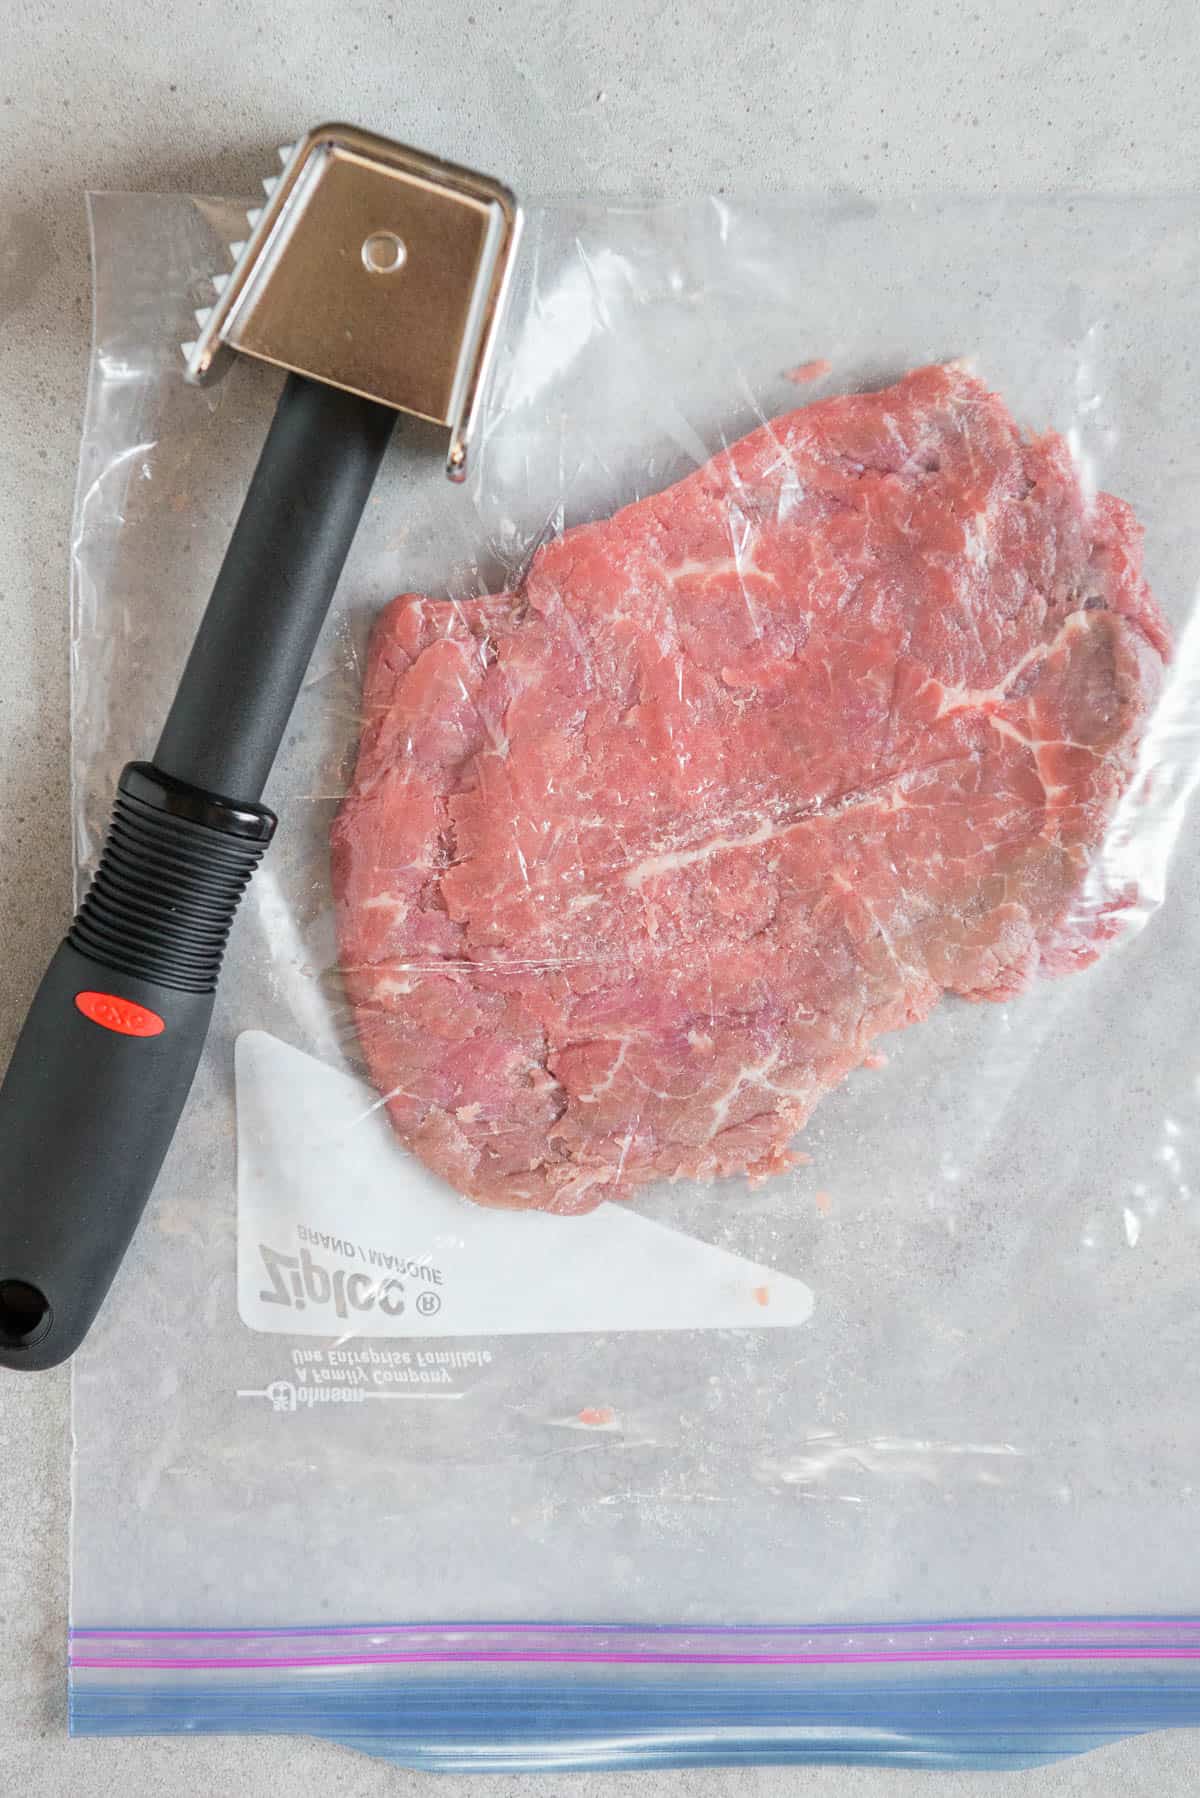 tenderized round steak in plastic bag